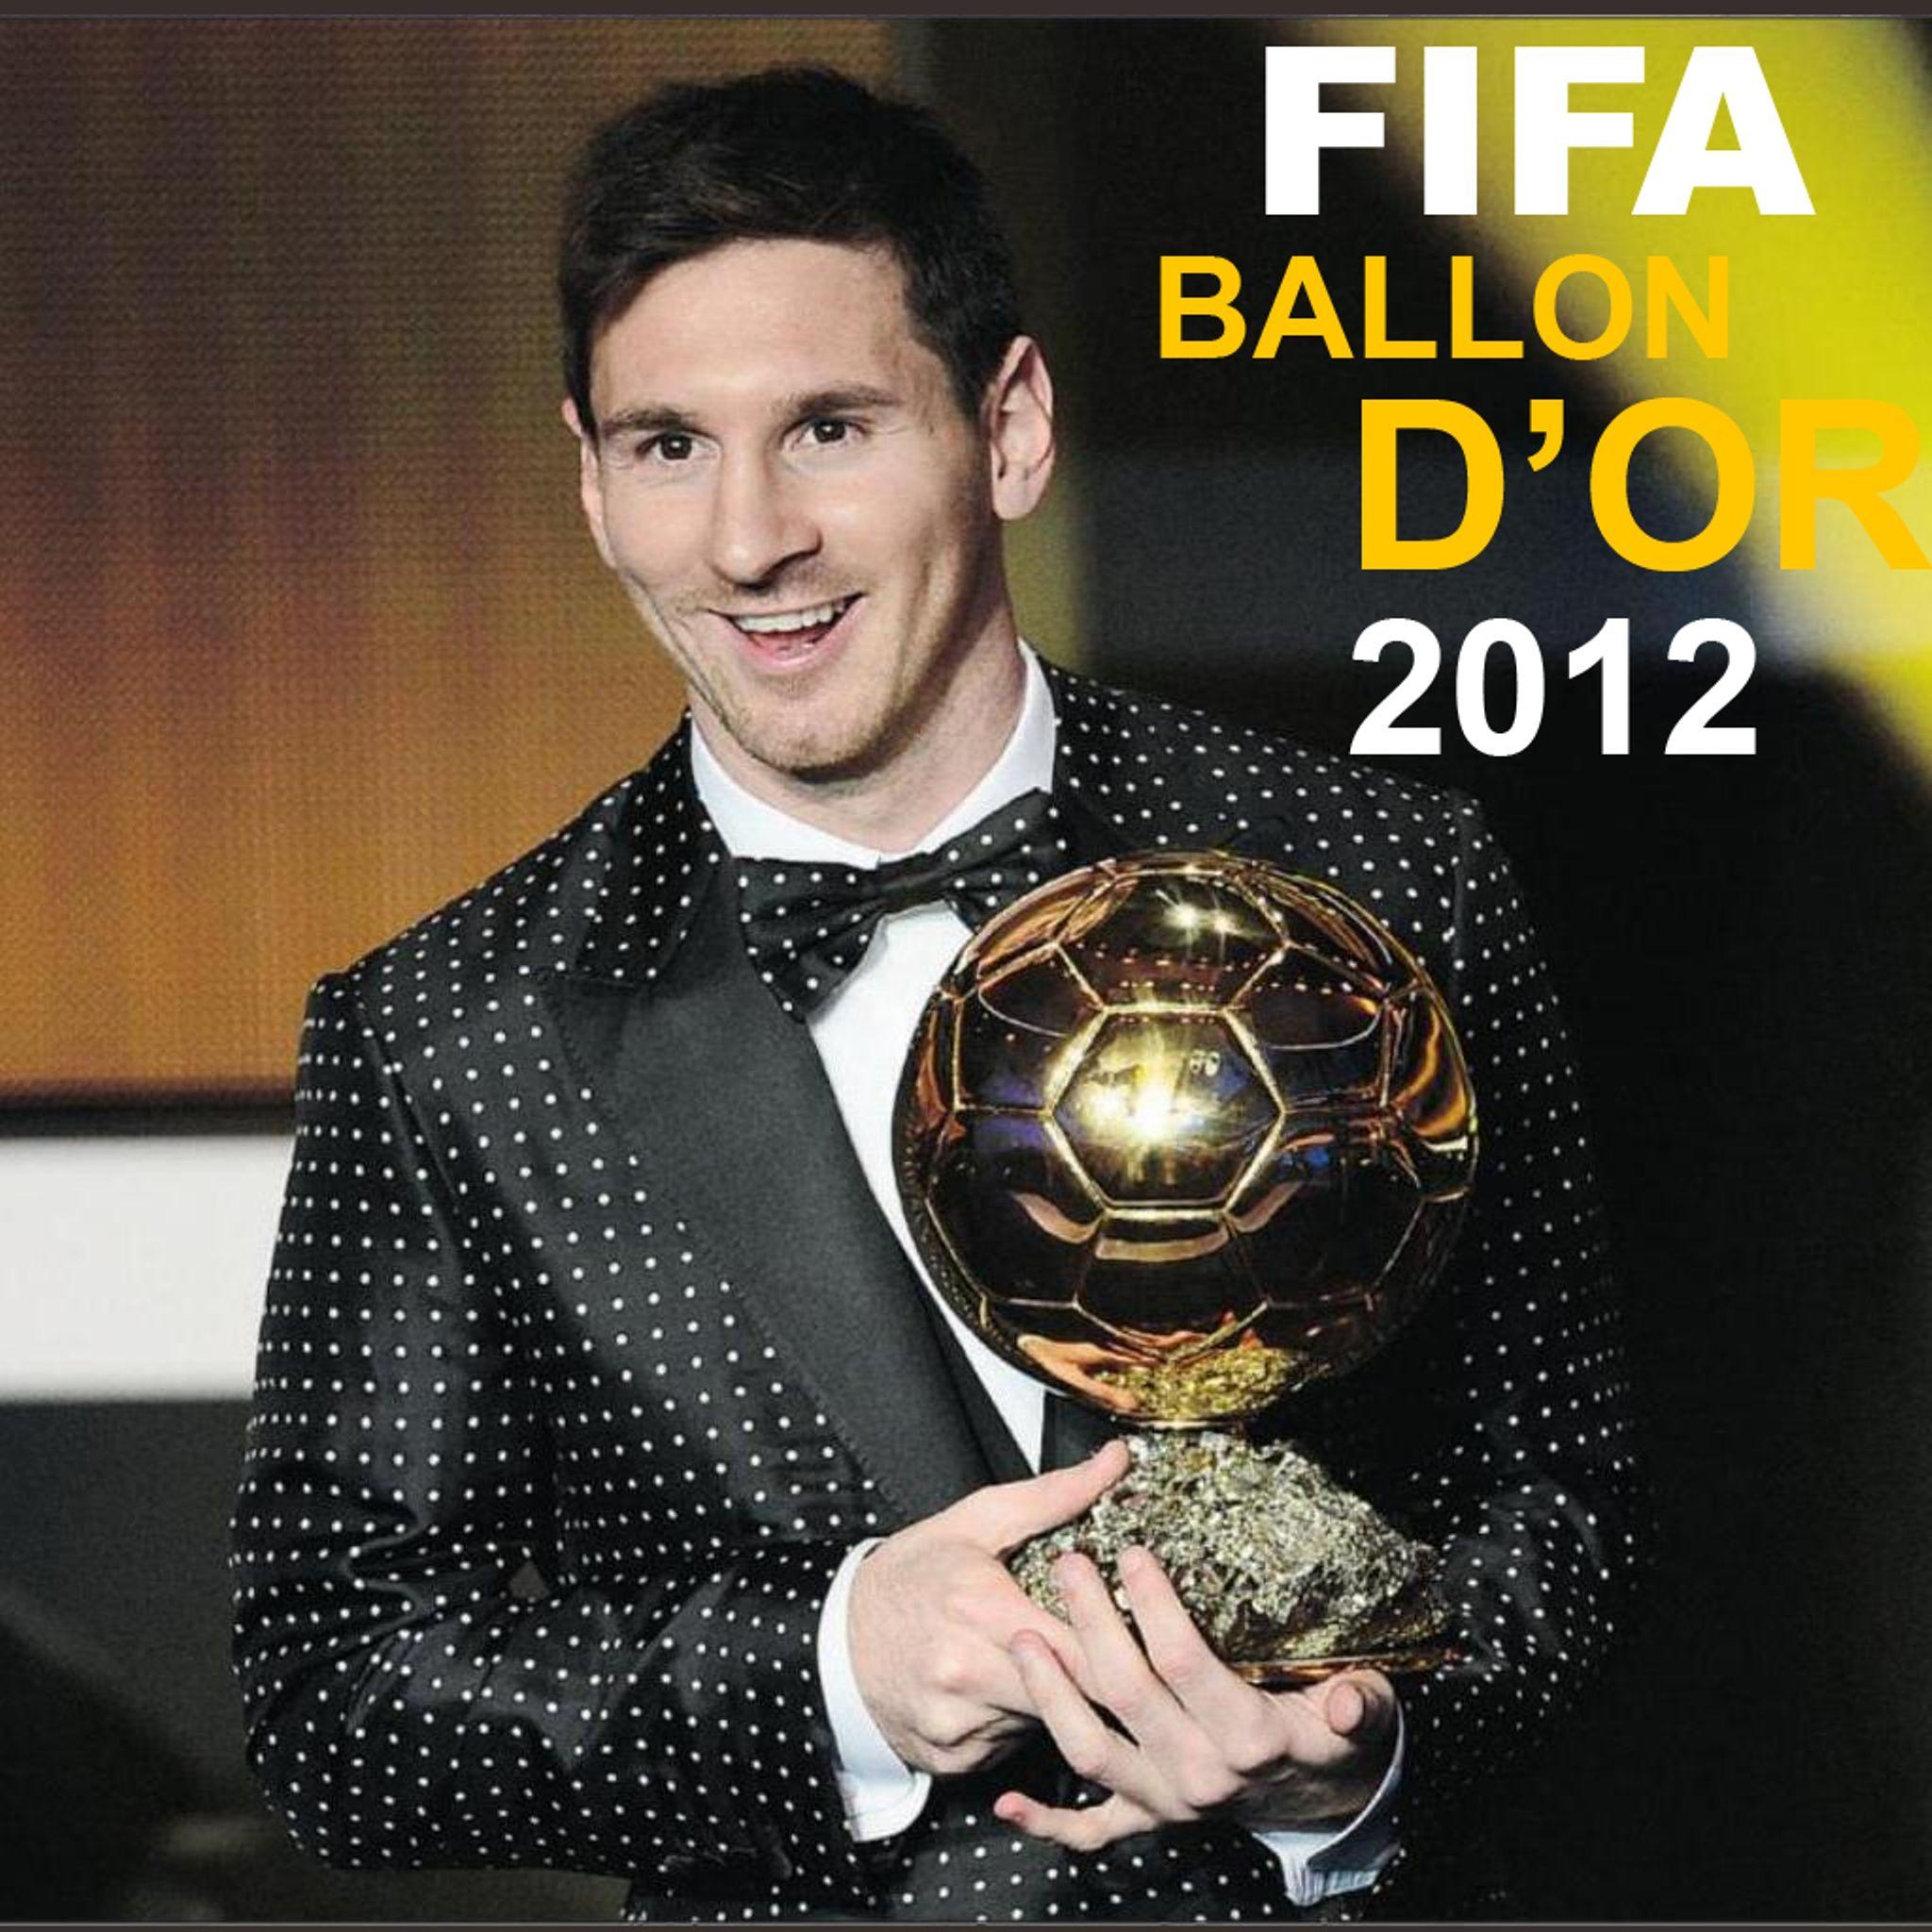 Lionel Messi Fifa Ballon Dor 2012 Gala .lajulpeter1972.wordpress.com